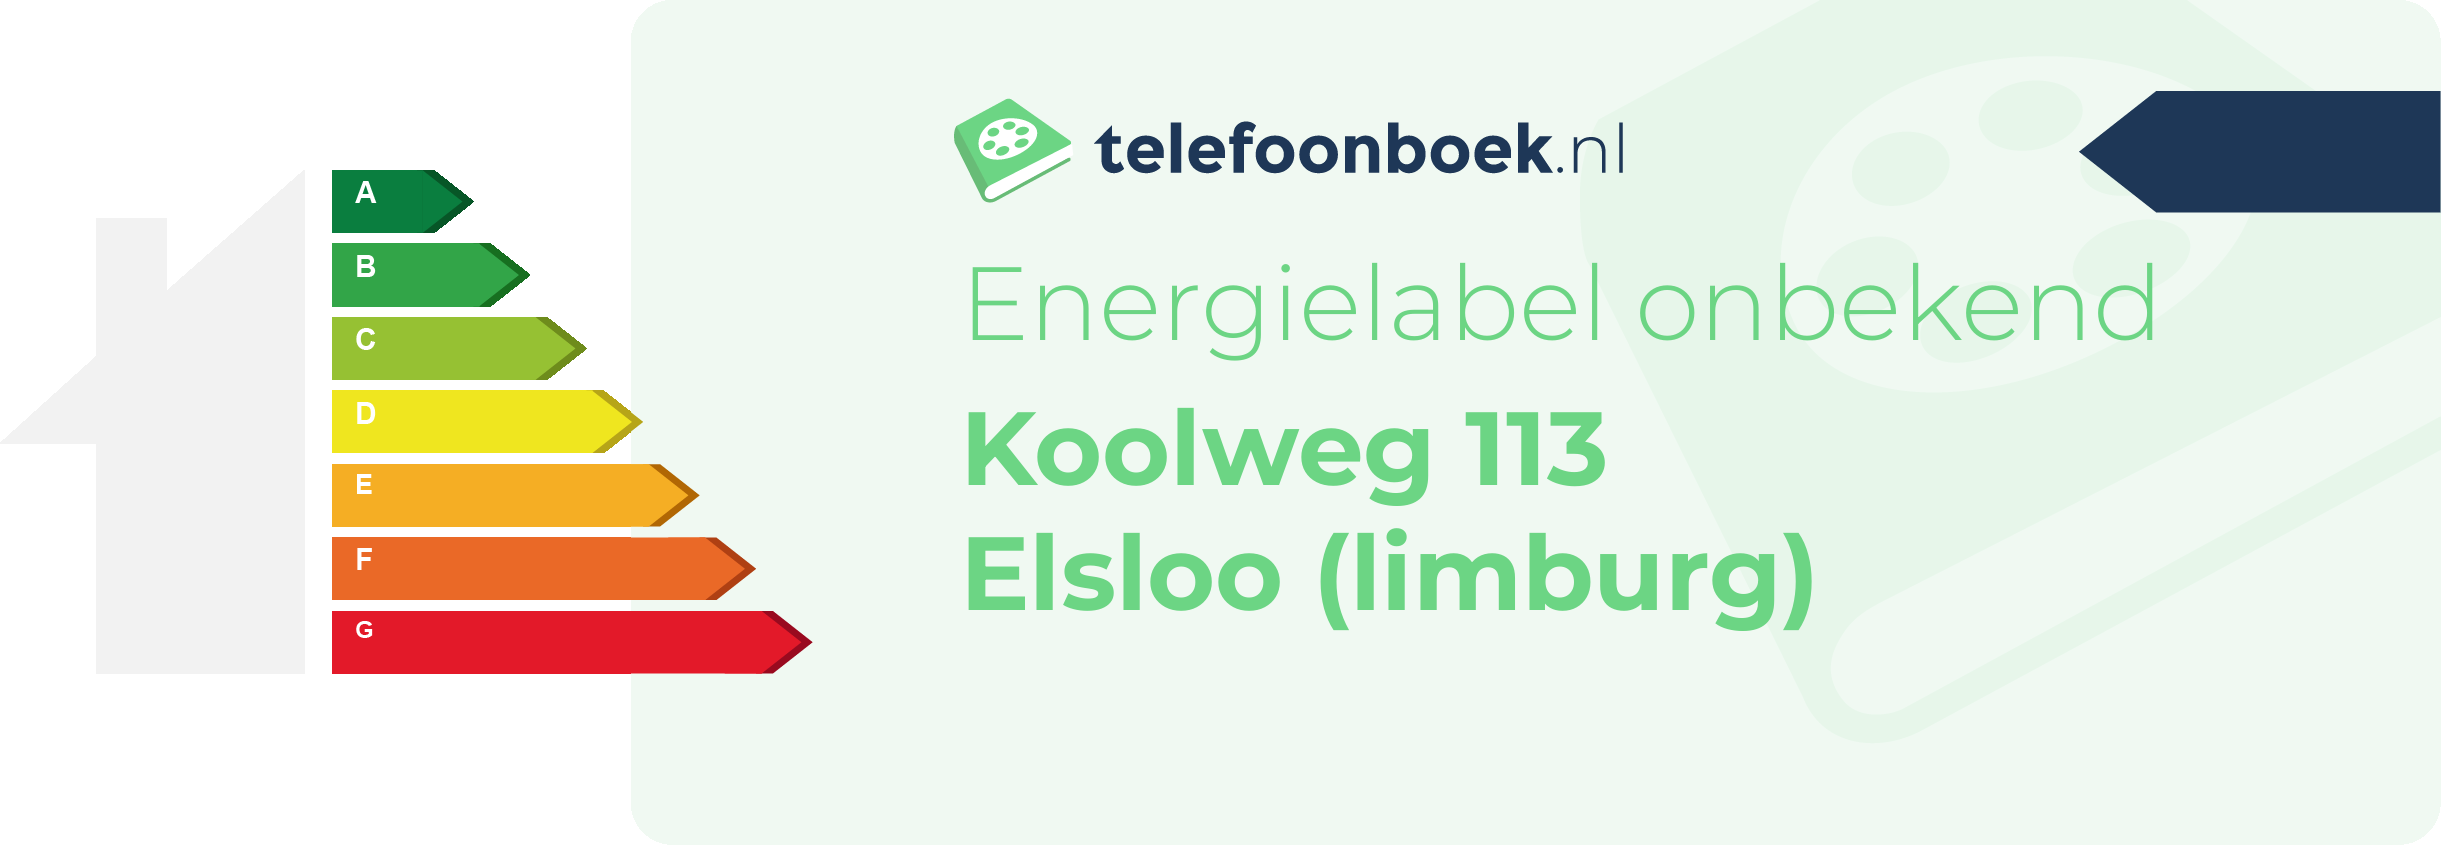 Energielabel Koolweg 113 Elsloo (Limburg)